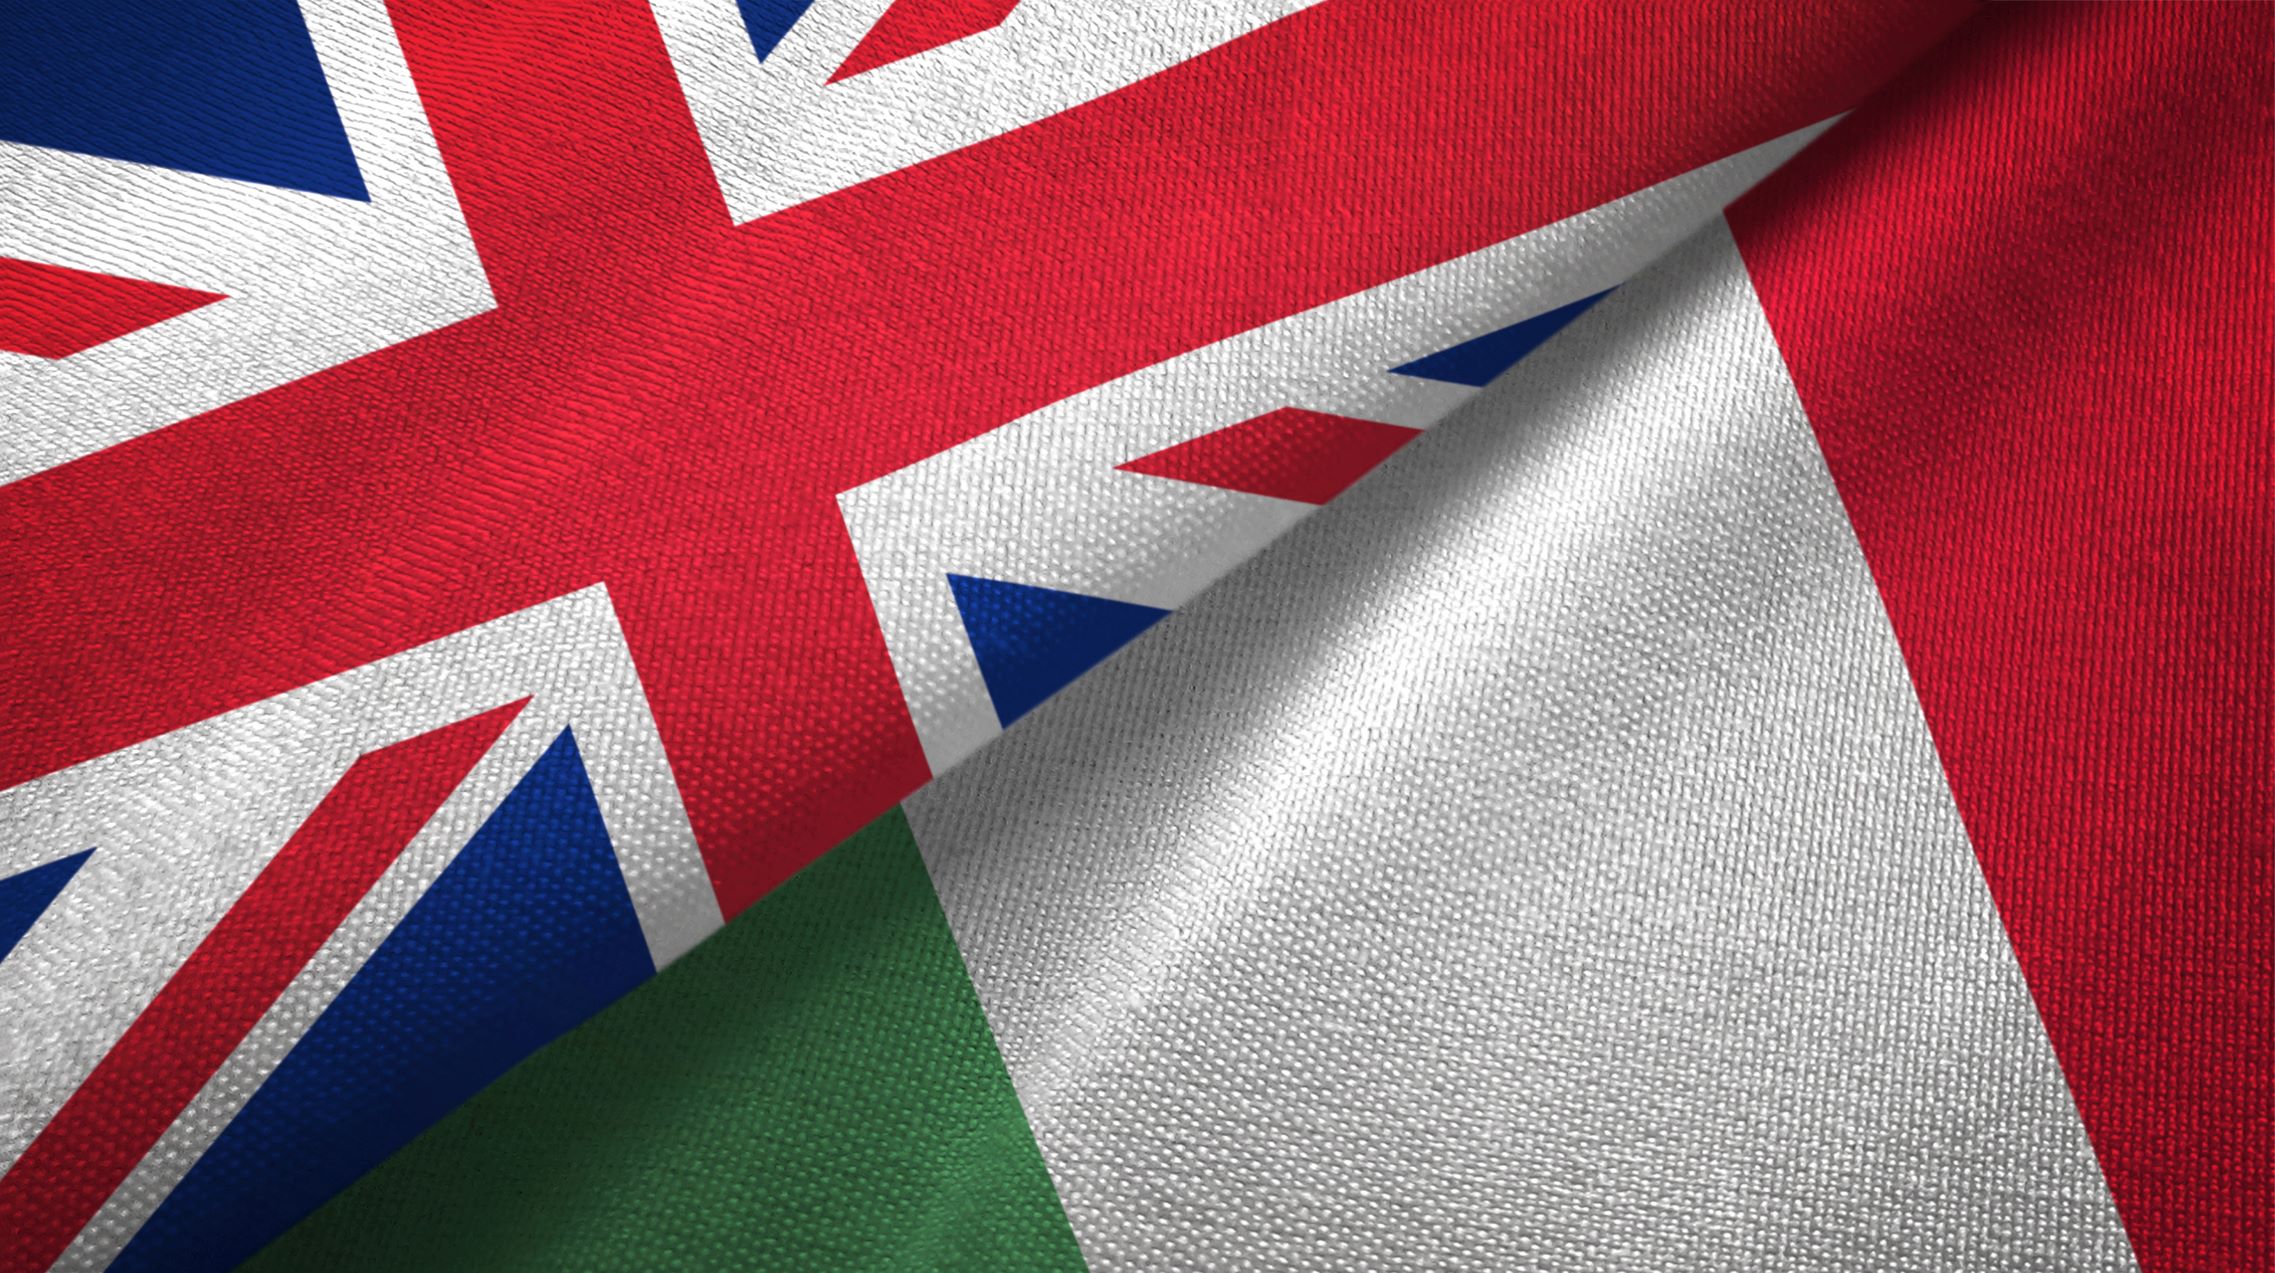 UK and Italian flags